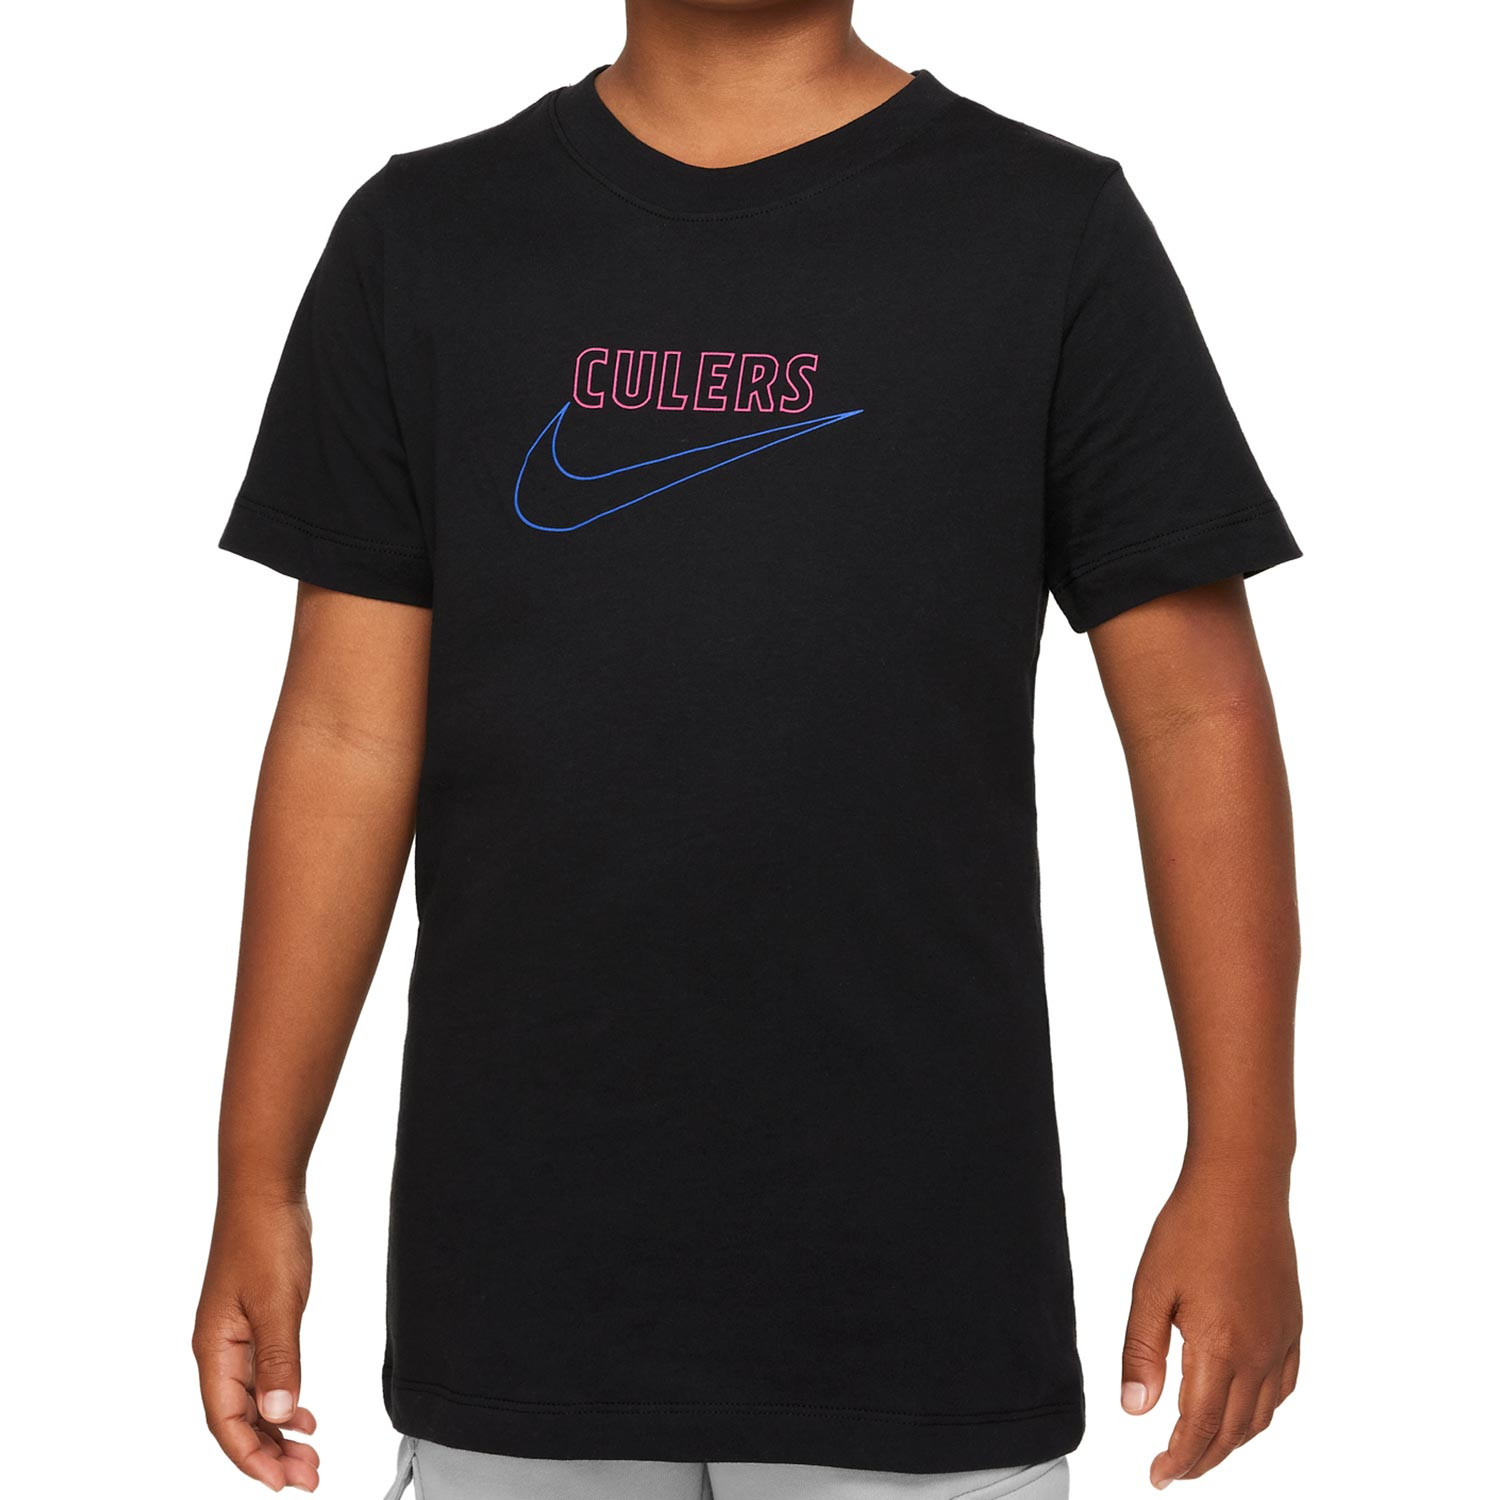 Barcelona Camiseta niño oficial, negro algodón paseo